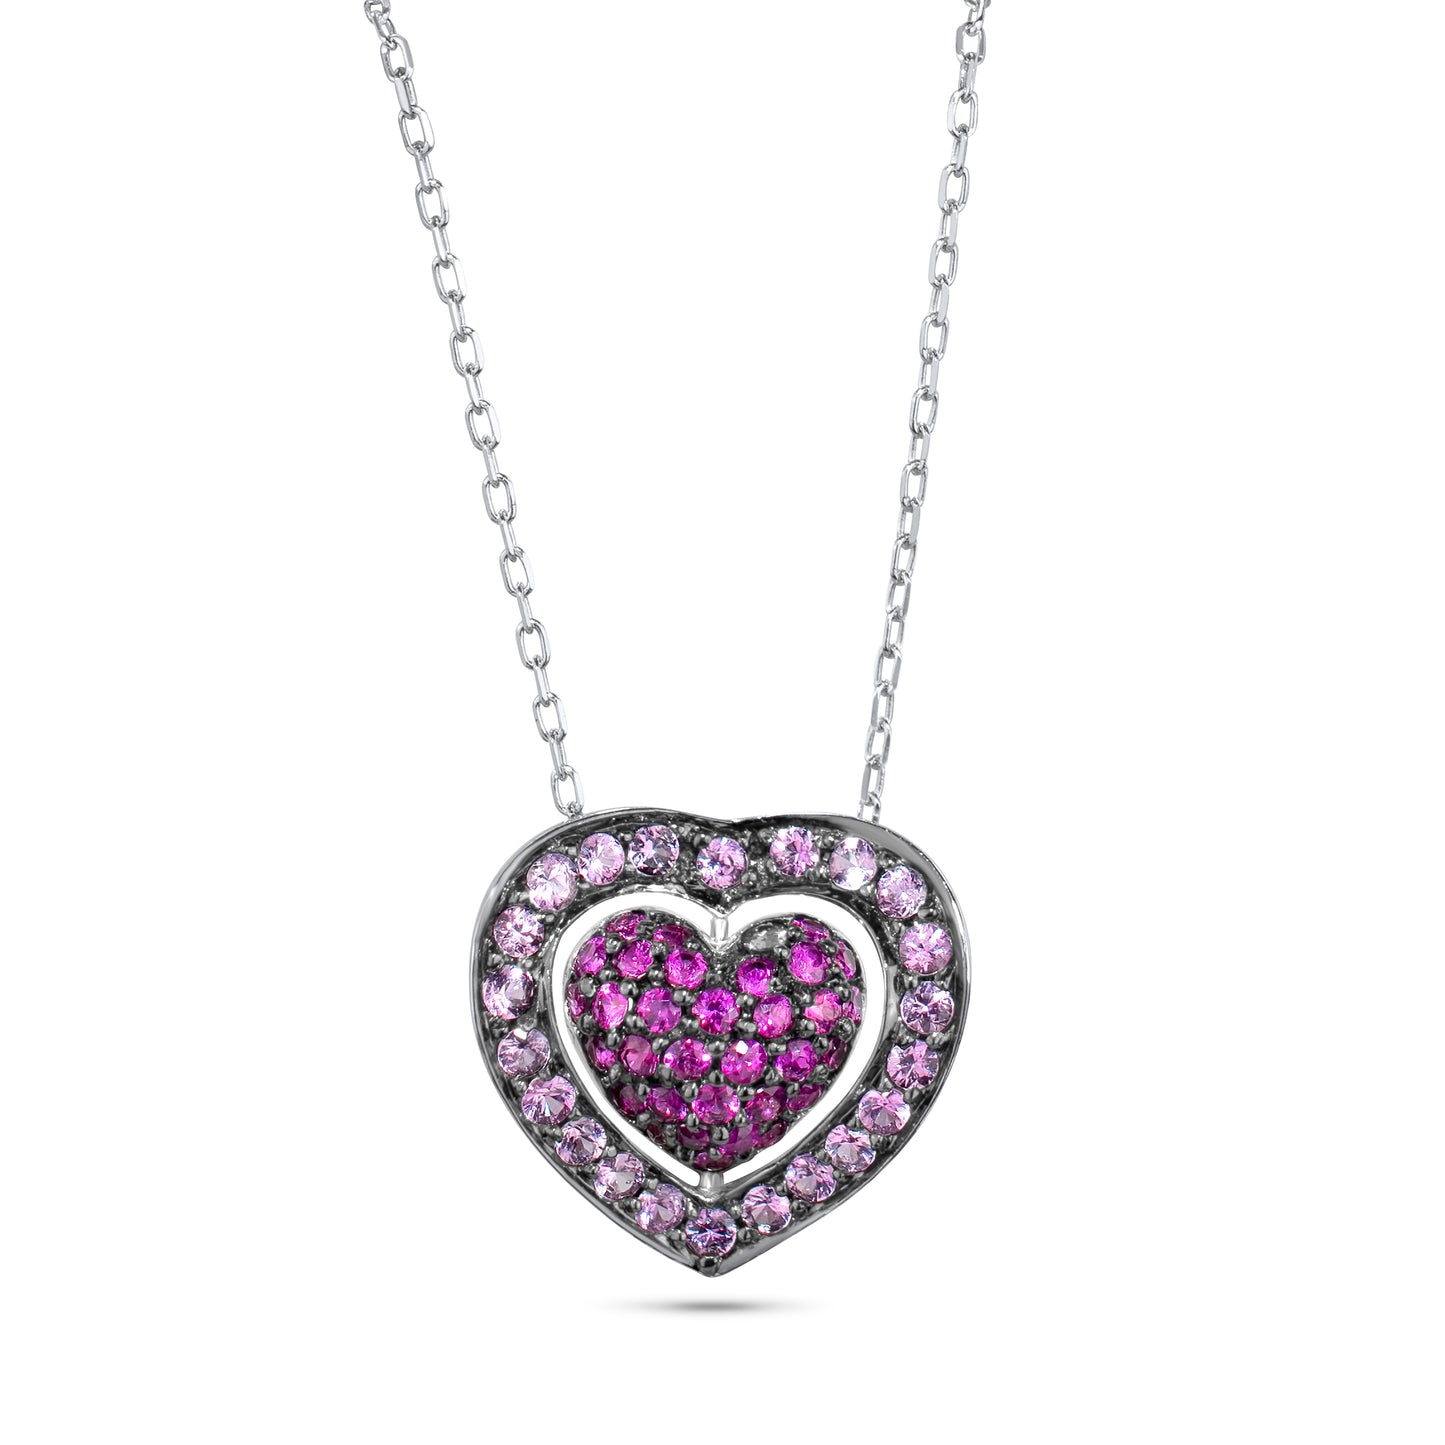 14k Pink Sapphire Heart Pendant Necklace 17"